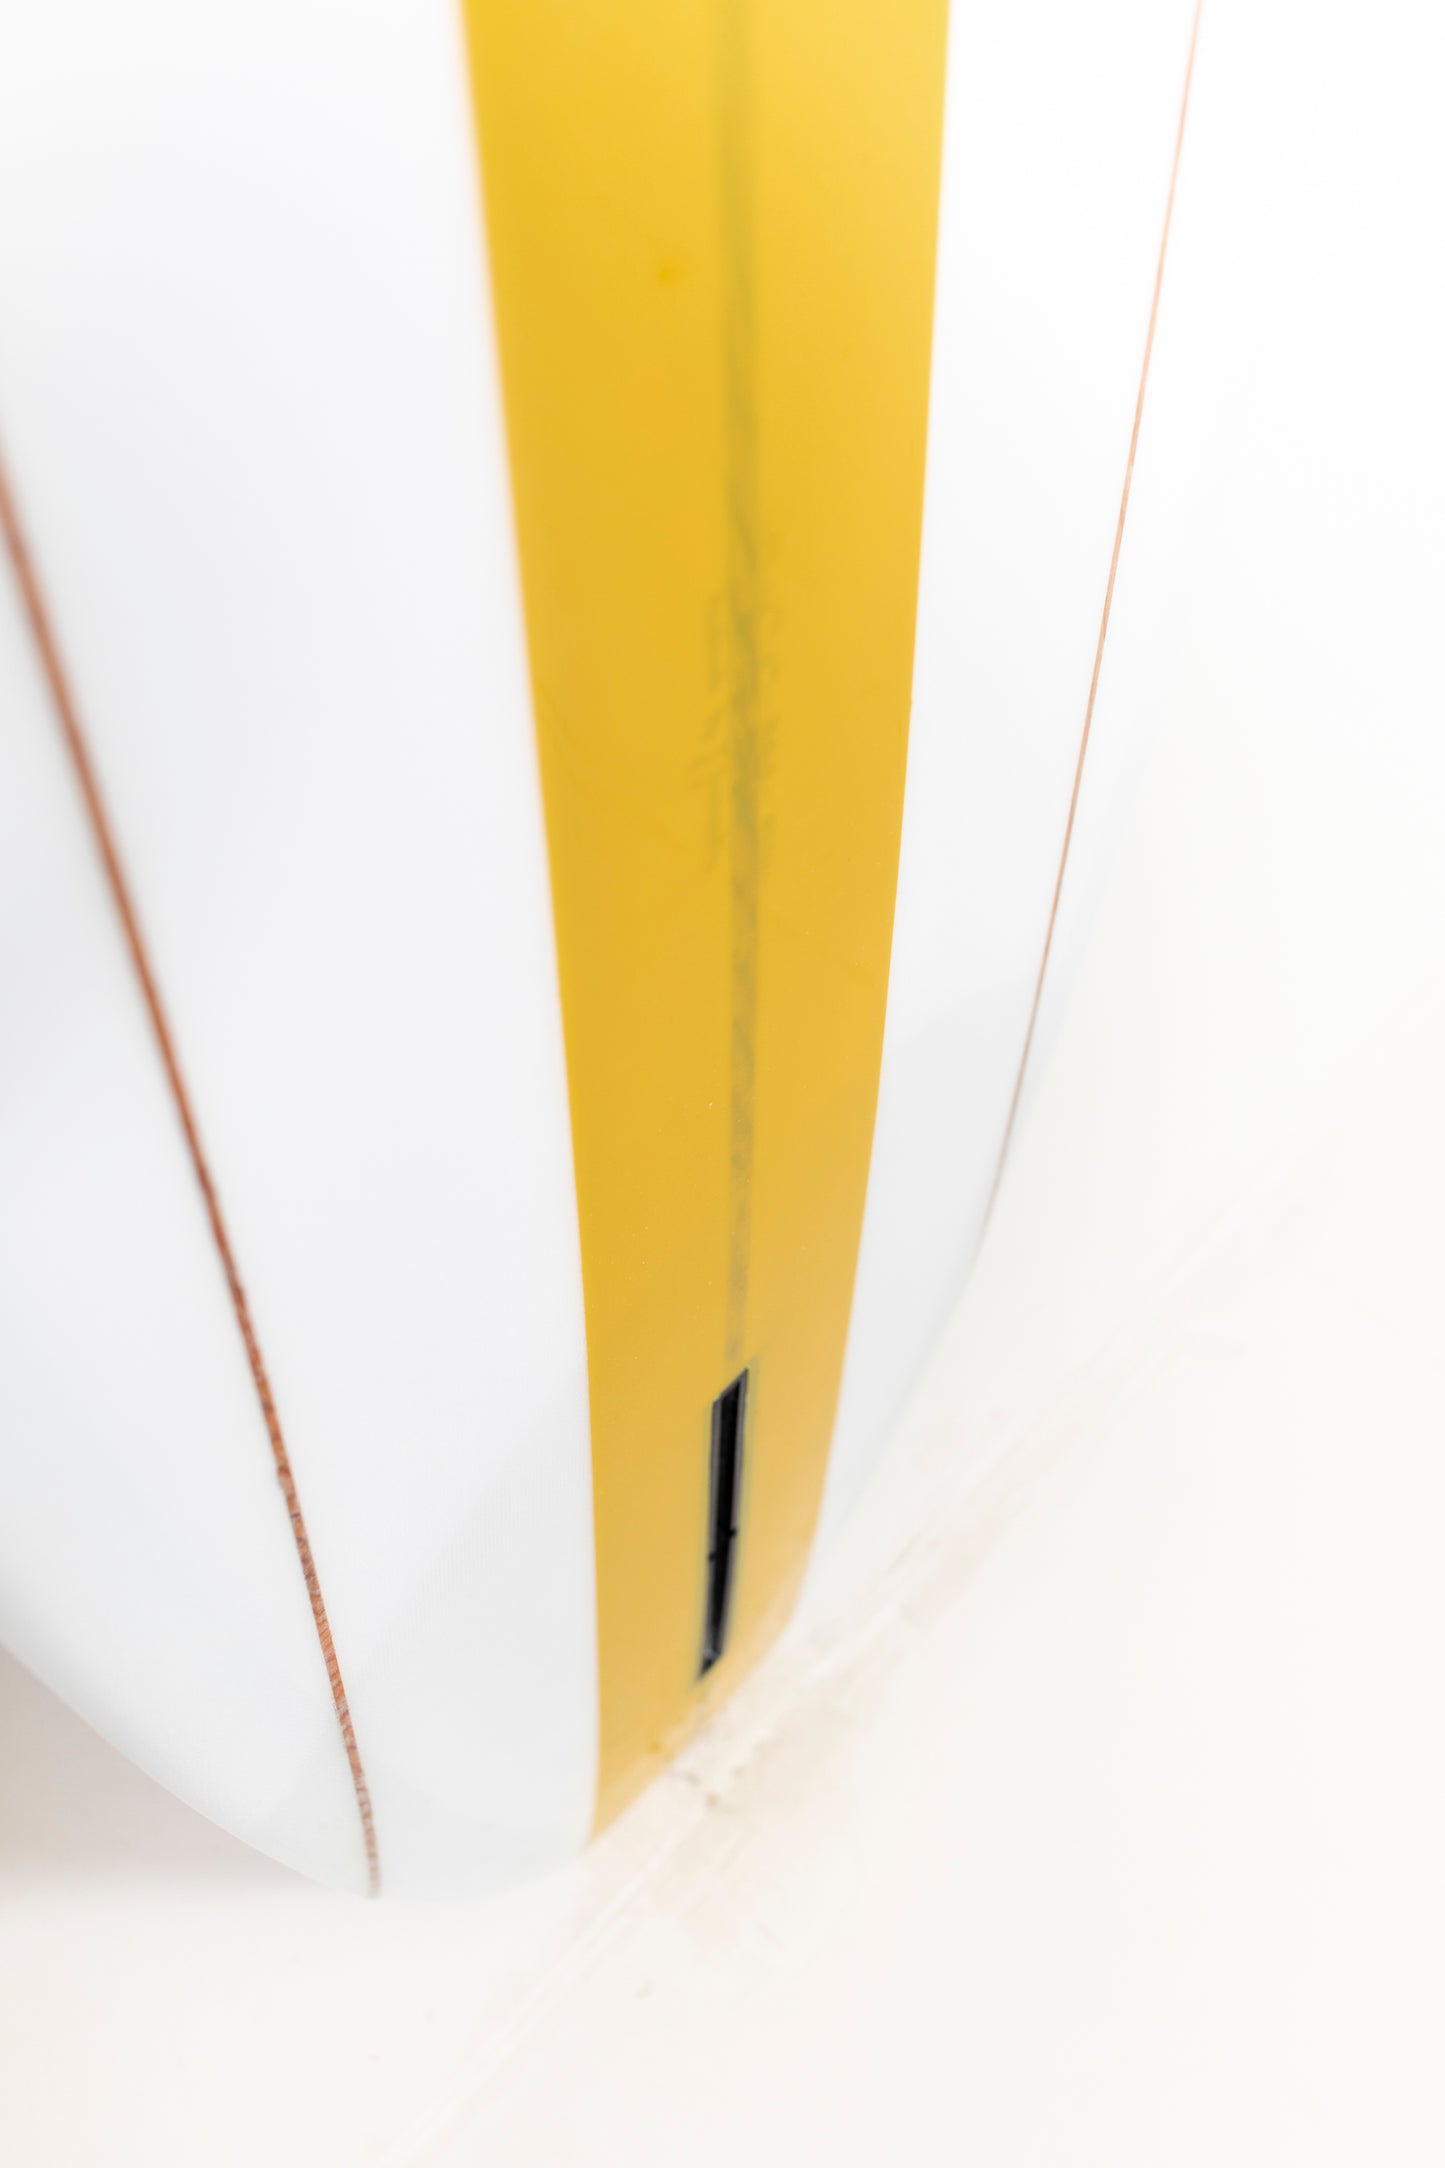 
                  
                    Pukas Surf Shop - Garmendia Surfboards - FREE BIRD - 9’7"
                  
                